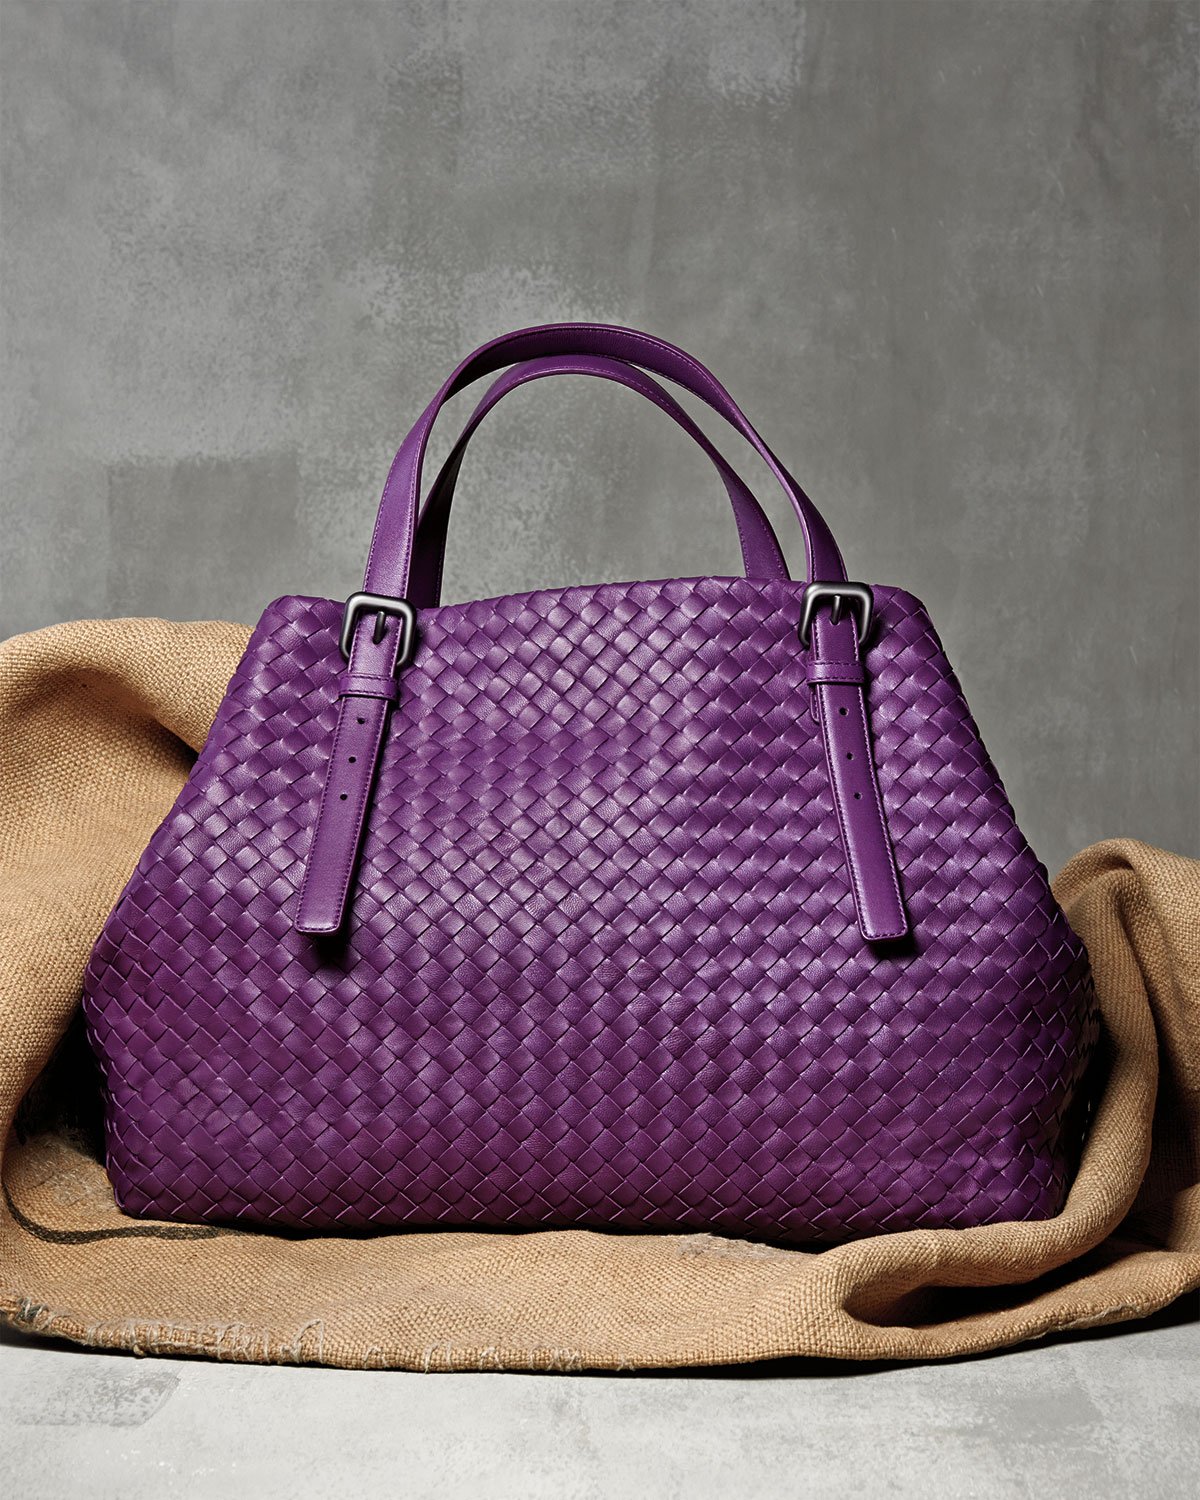 Lyst - Bottega Veneta Woven Large A-Shape Tote Bag in Purple